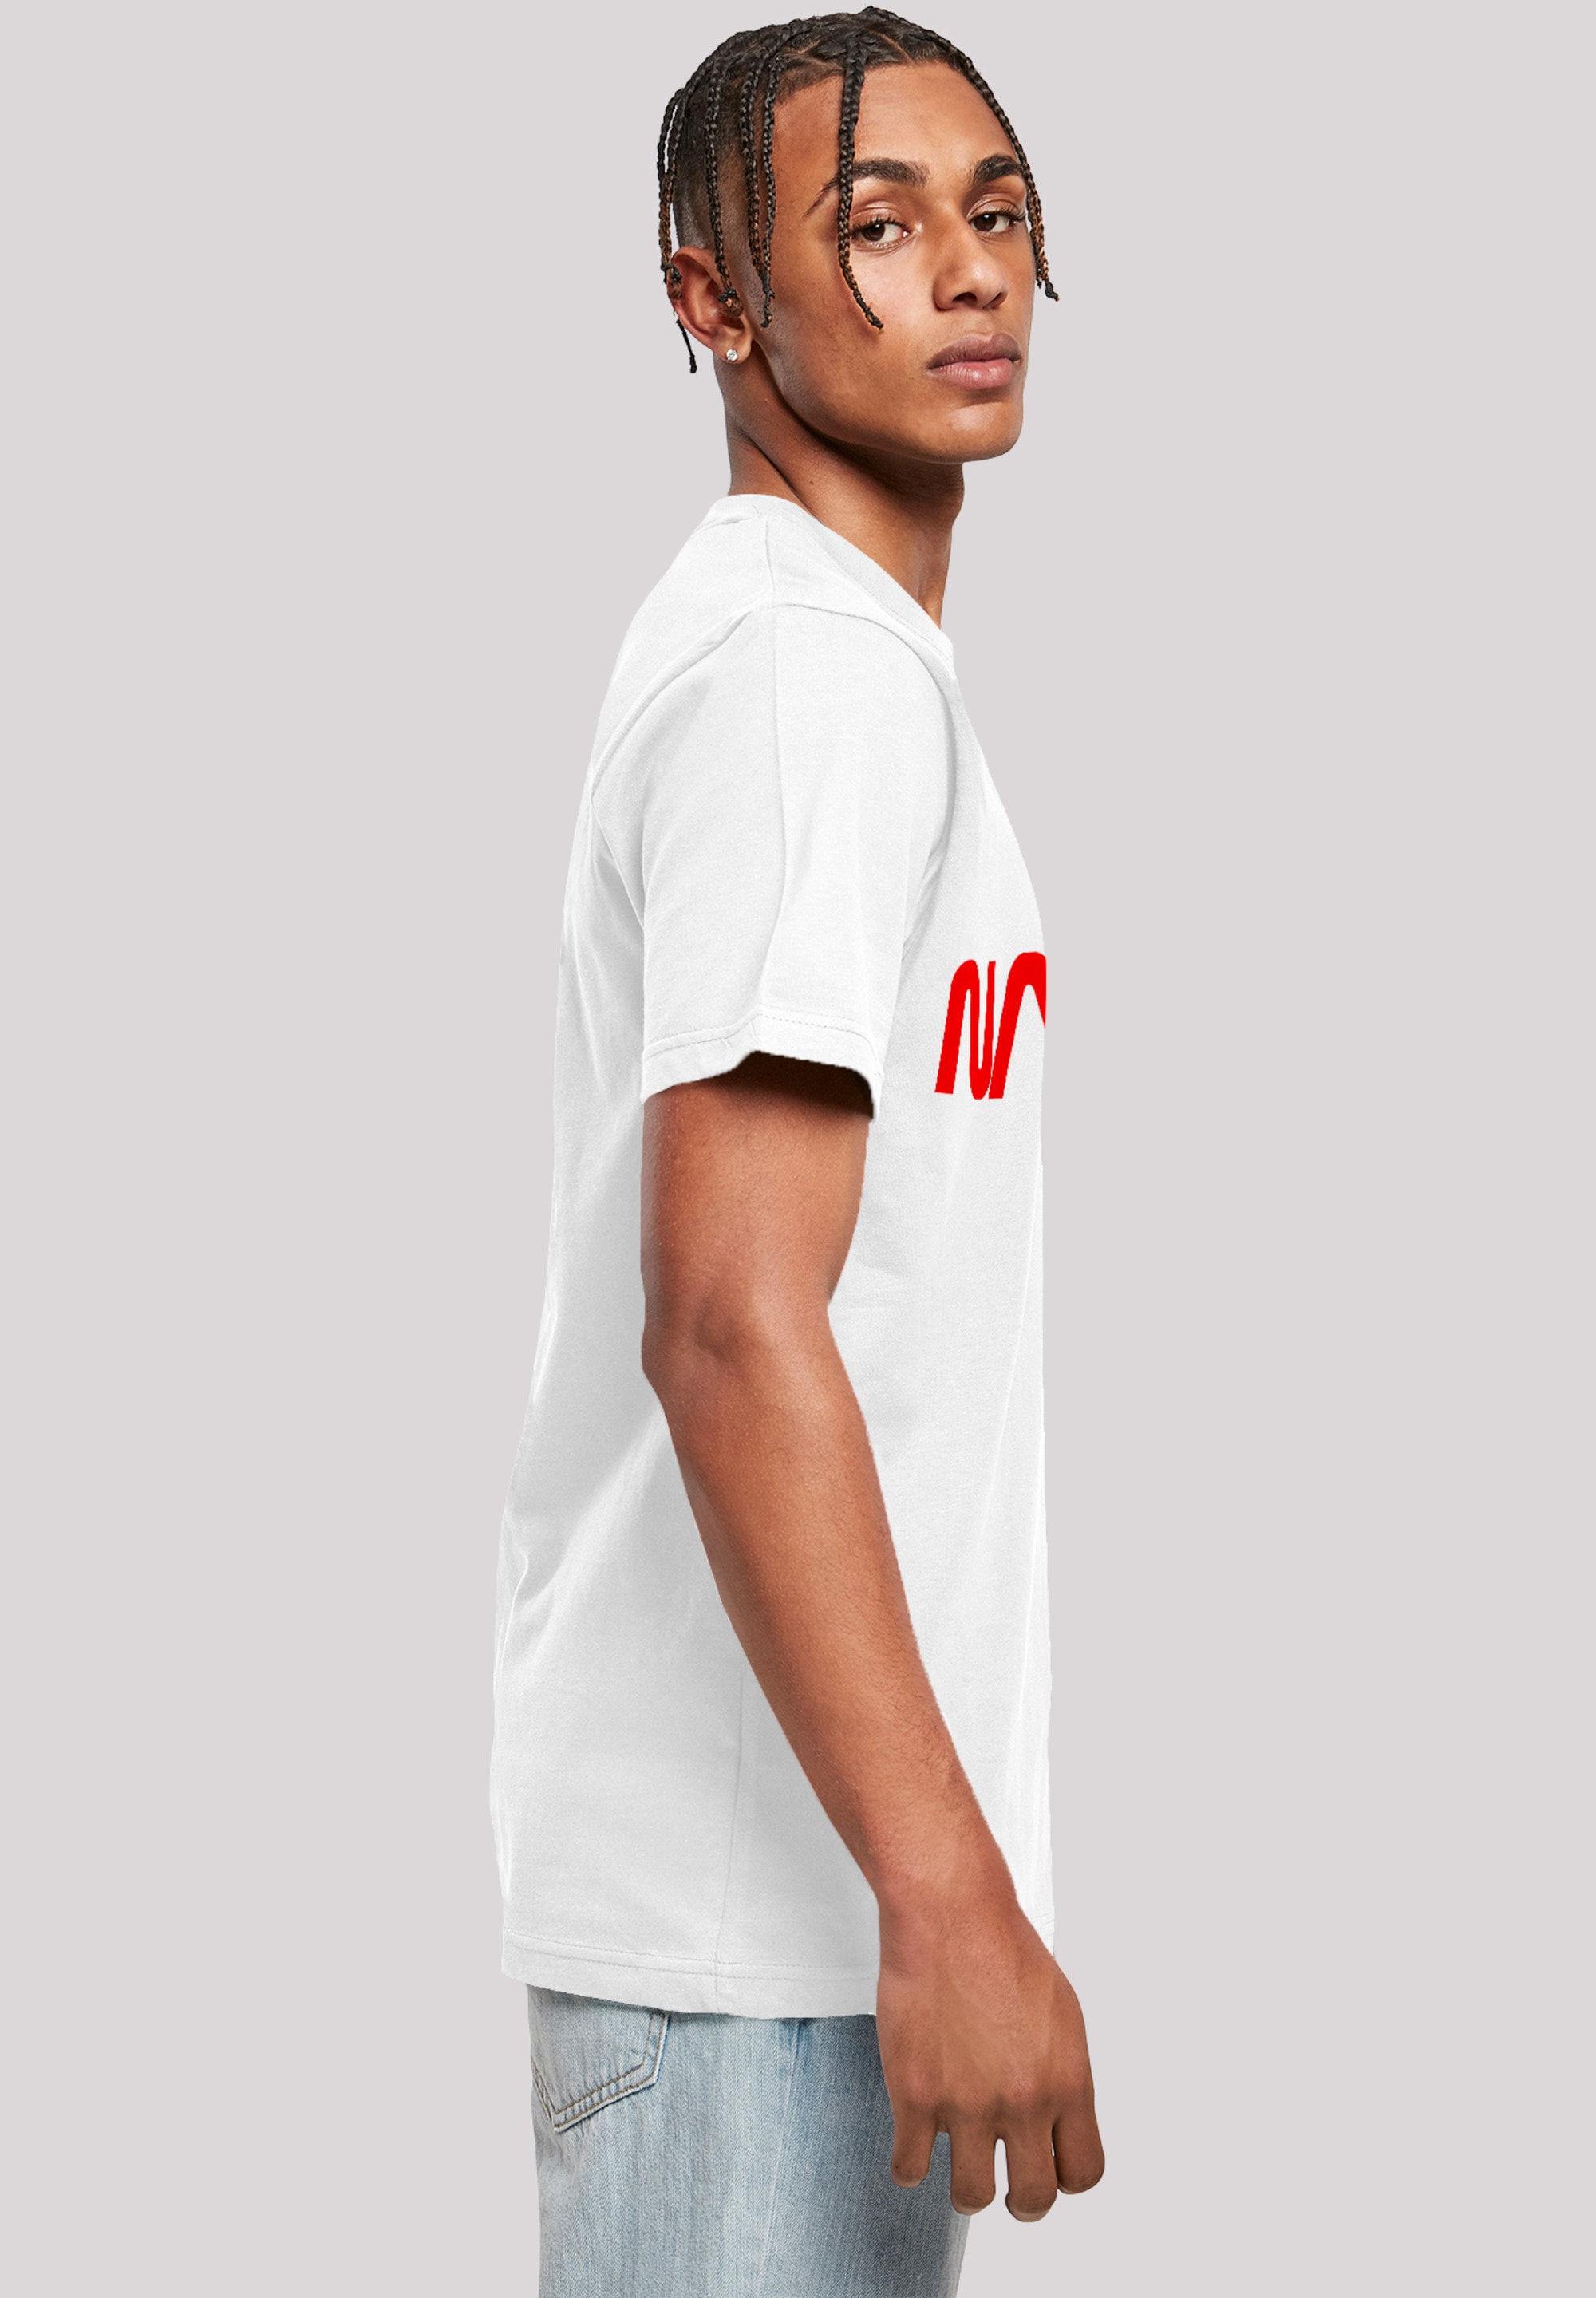 F4NT4STIC T-Shirt »NASA Modern Logo White«, Herren,Premium Merch,Regular-Fit,Basic,Bedruckt